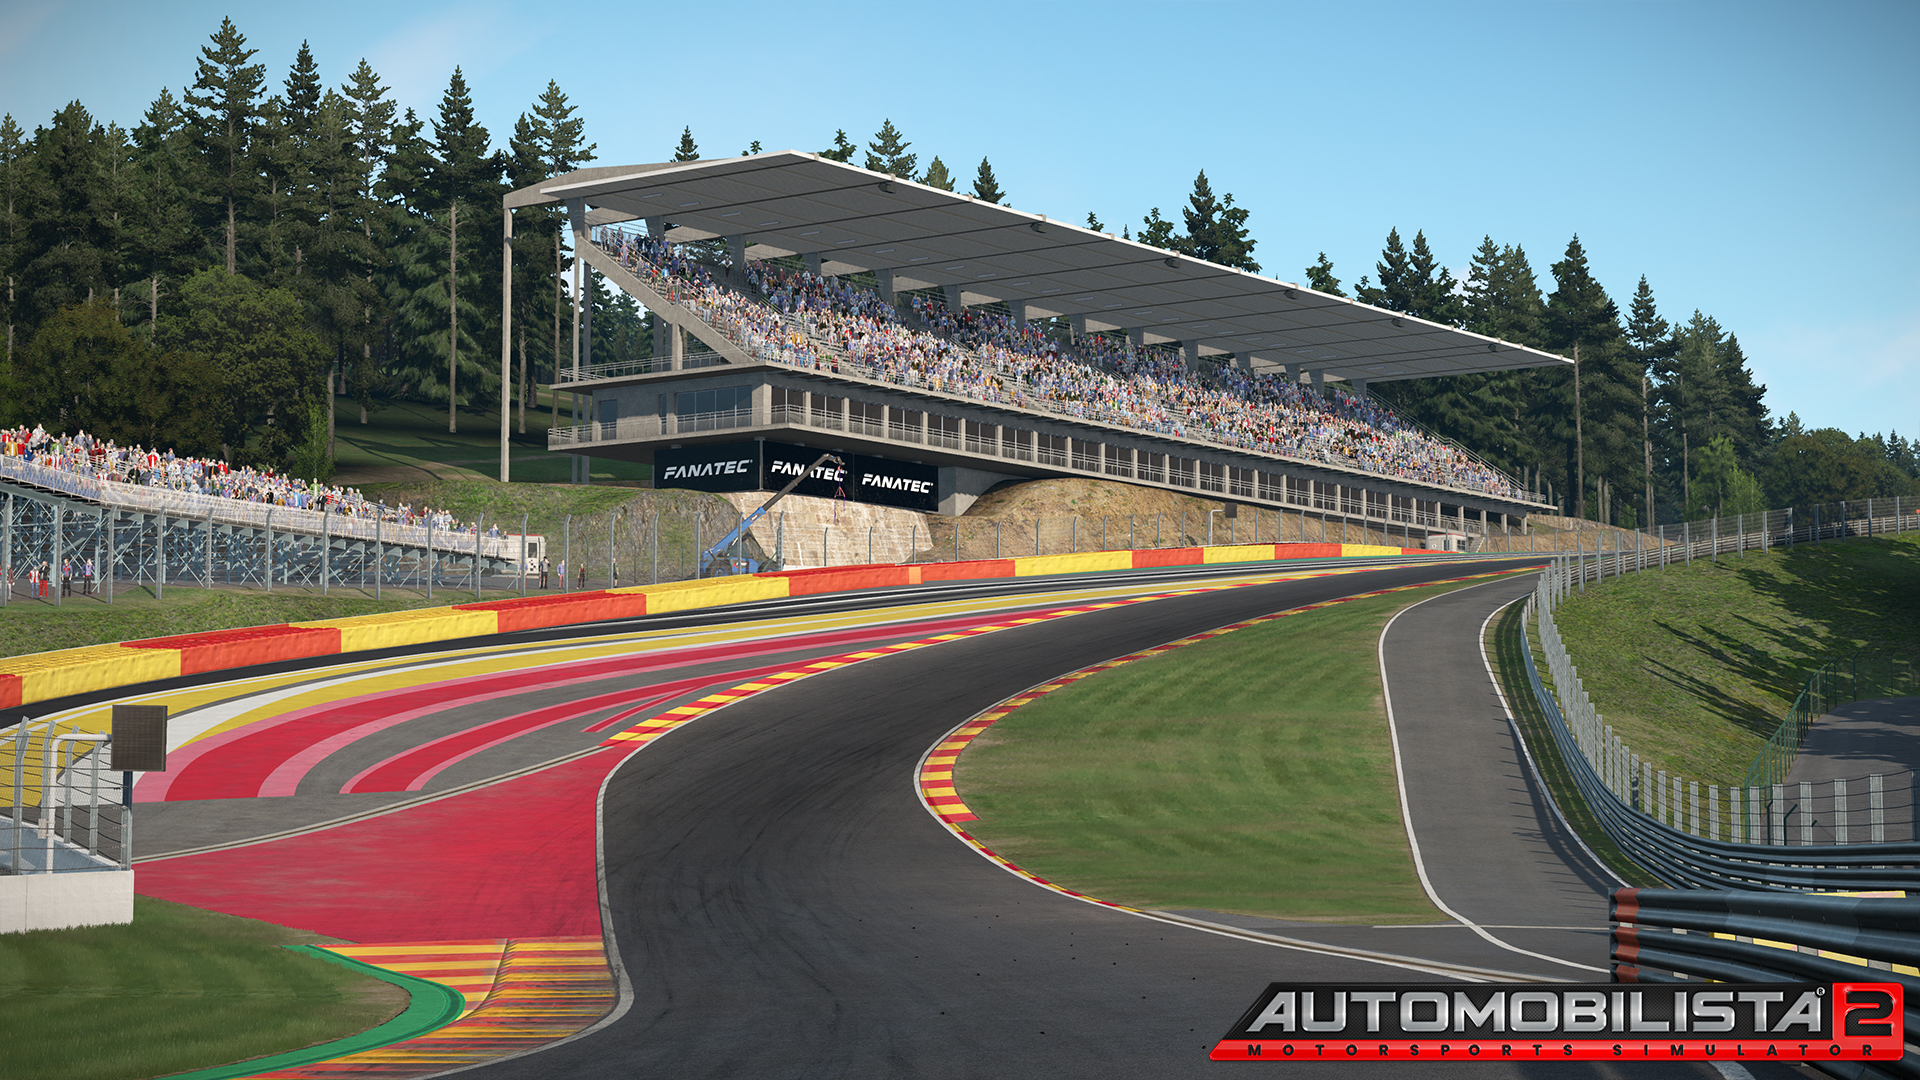 More information about "Automobilista 2: nuovo update fix disponibile"